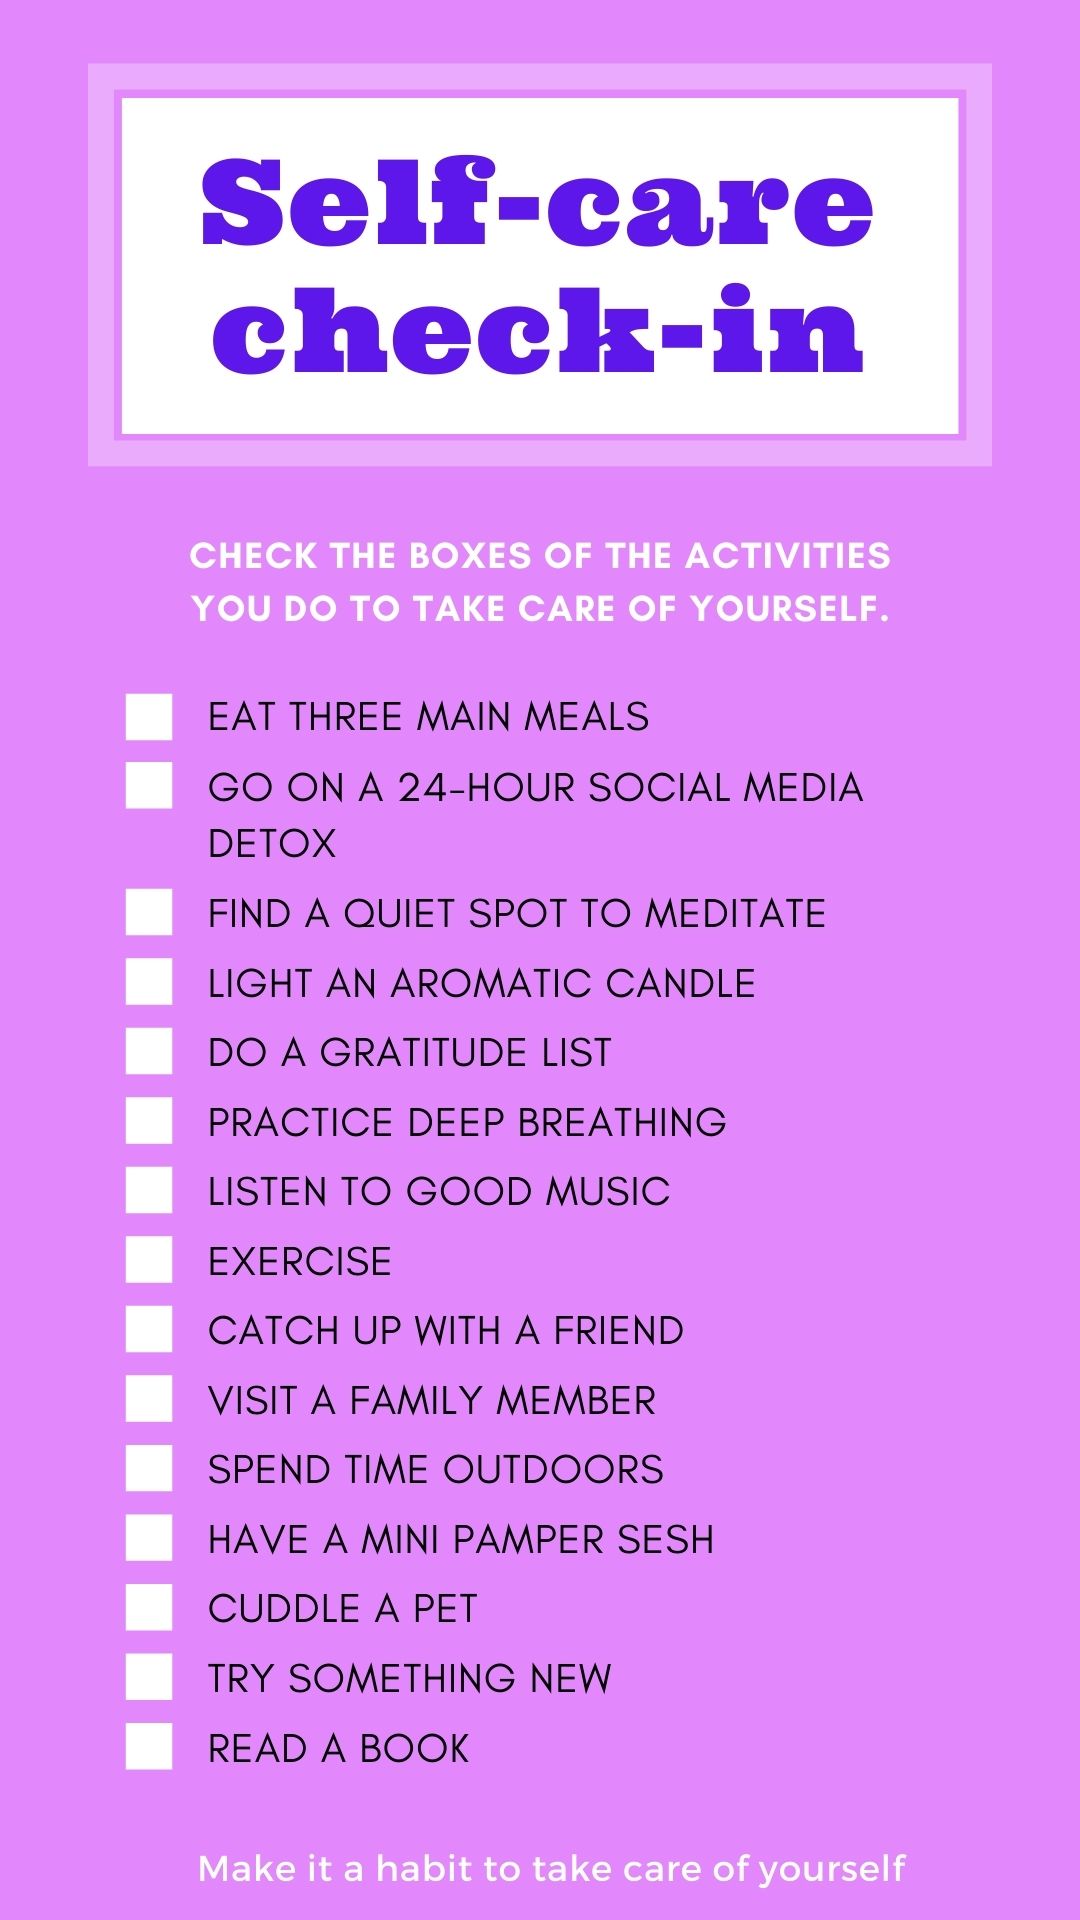 <img src="purple.jpg" alt="purple self-care checklist"/> 